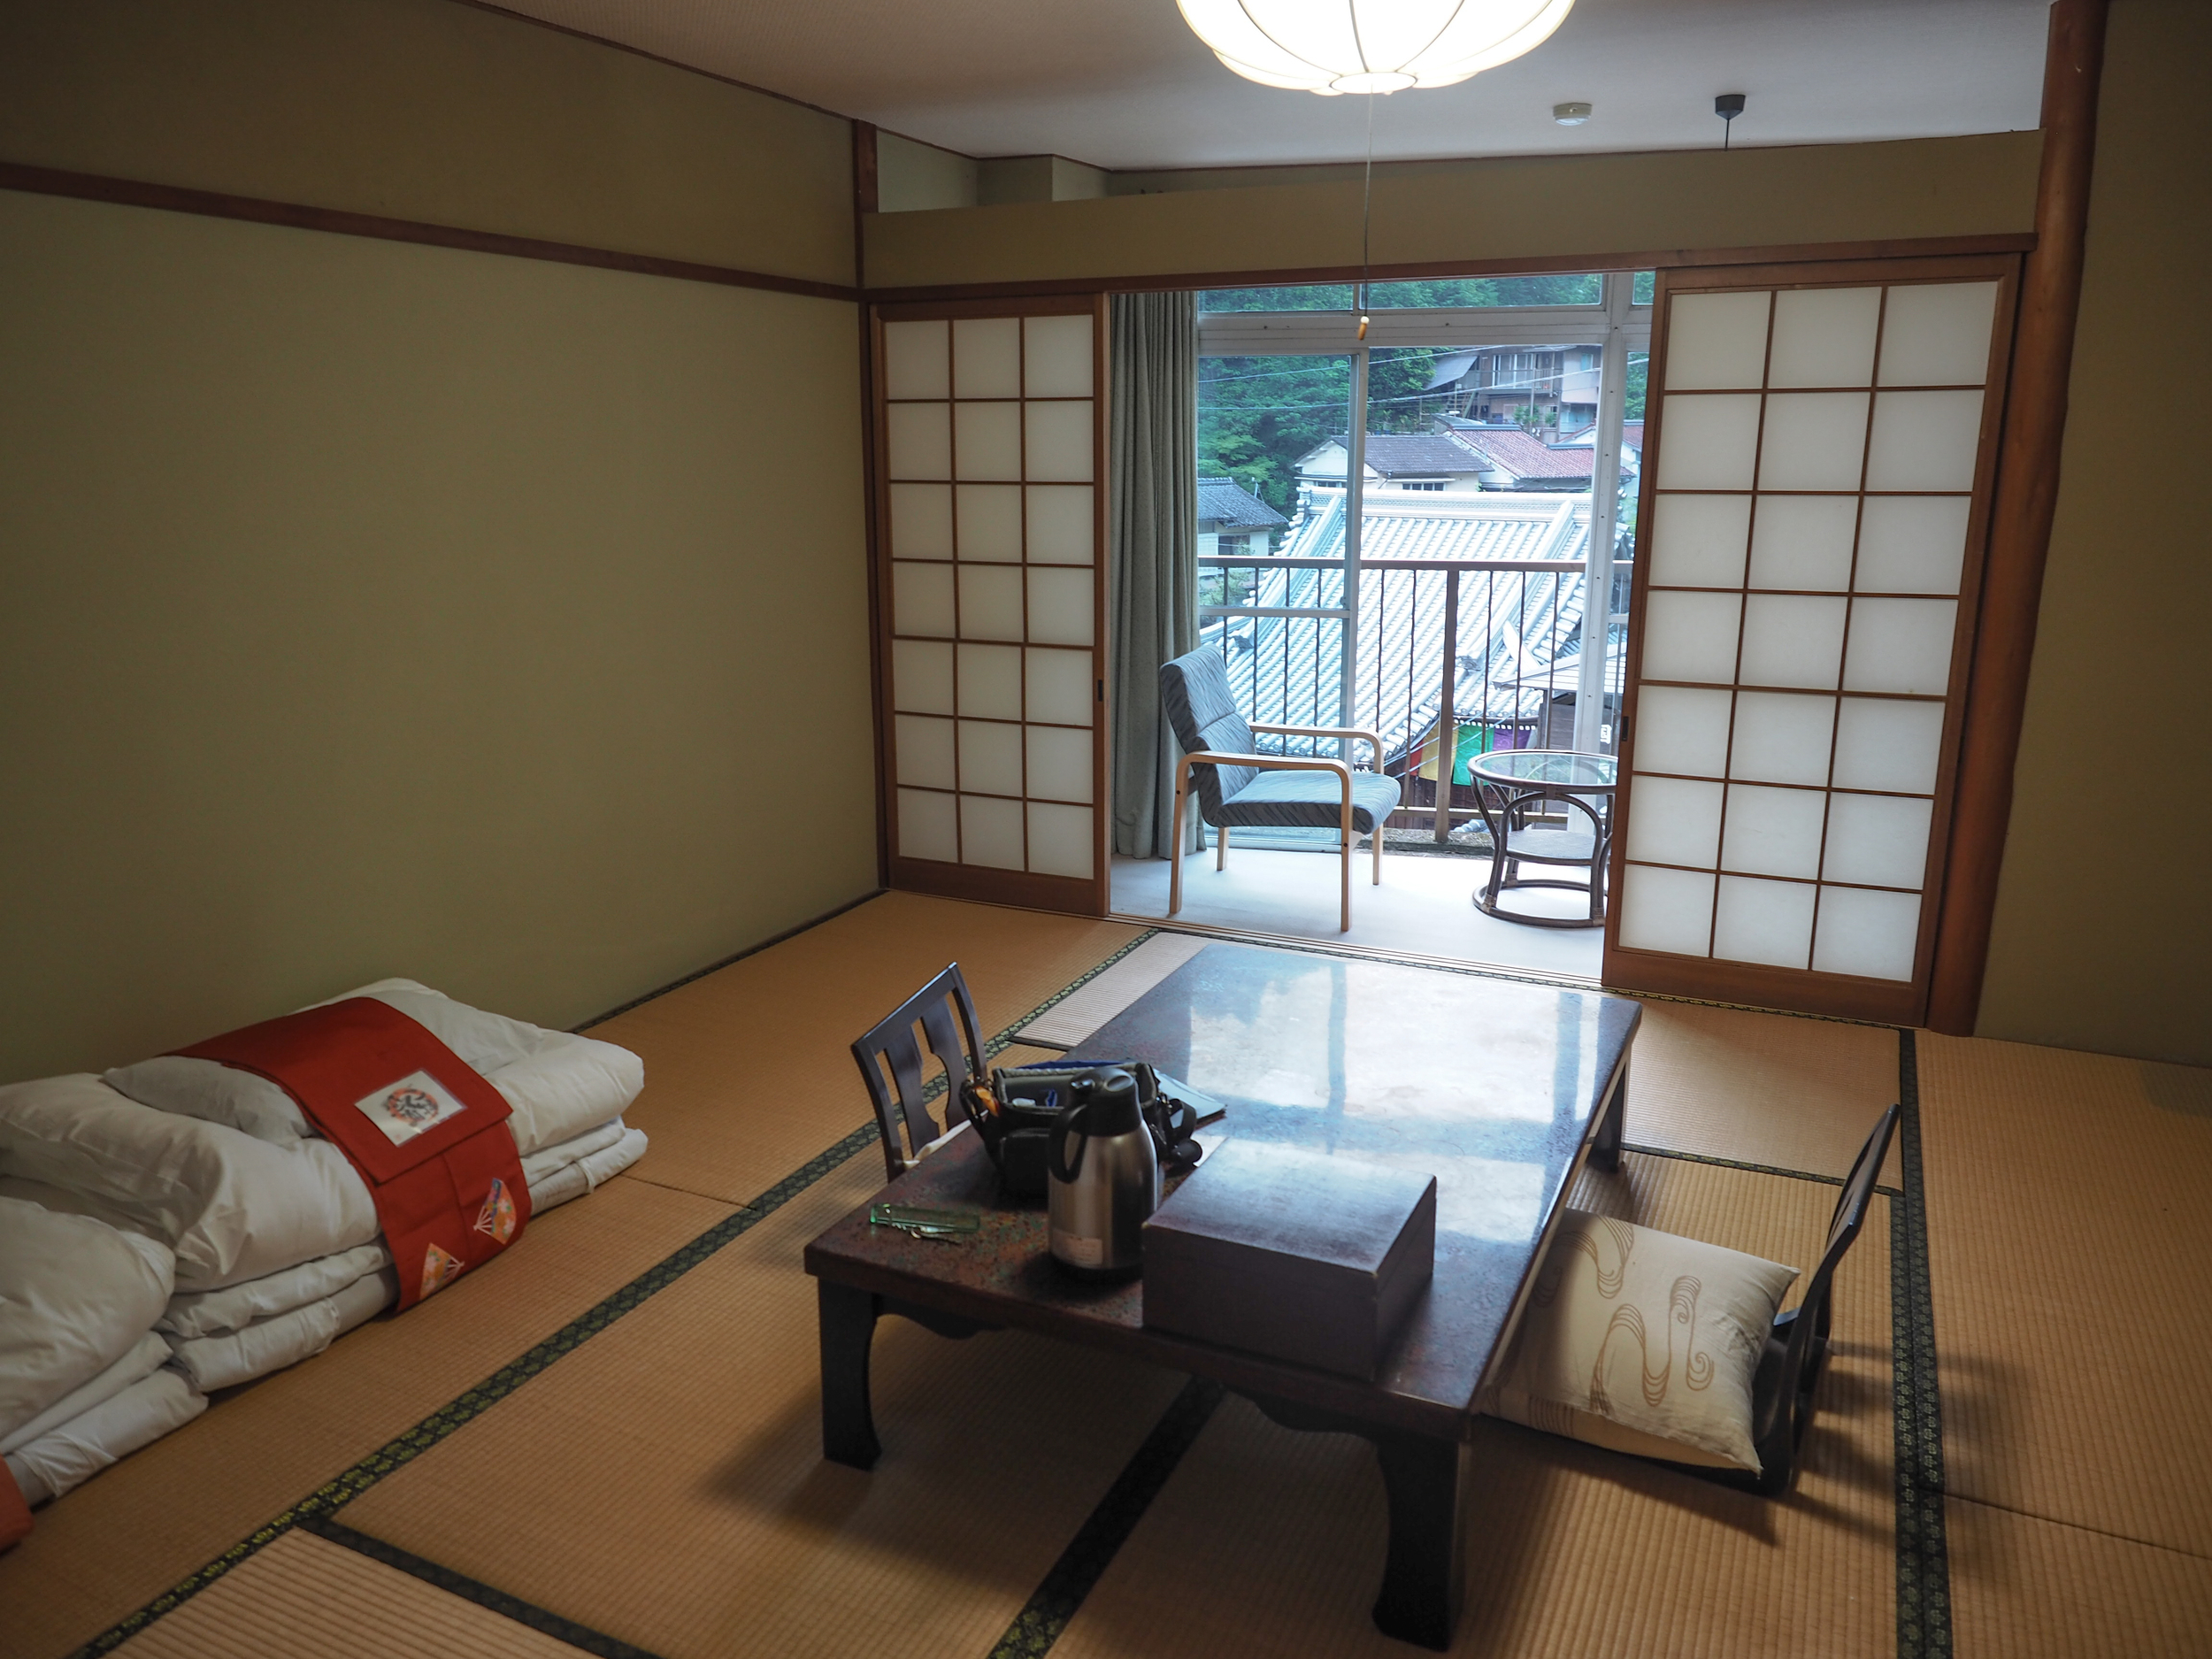 Ryokan room in Yunomine Onsen